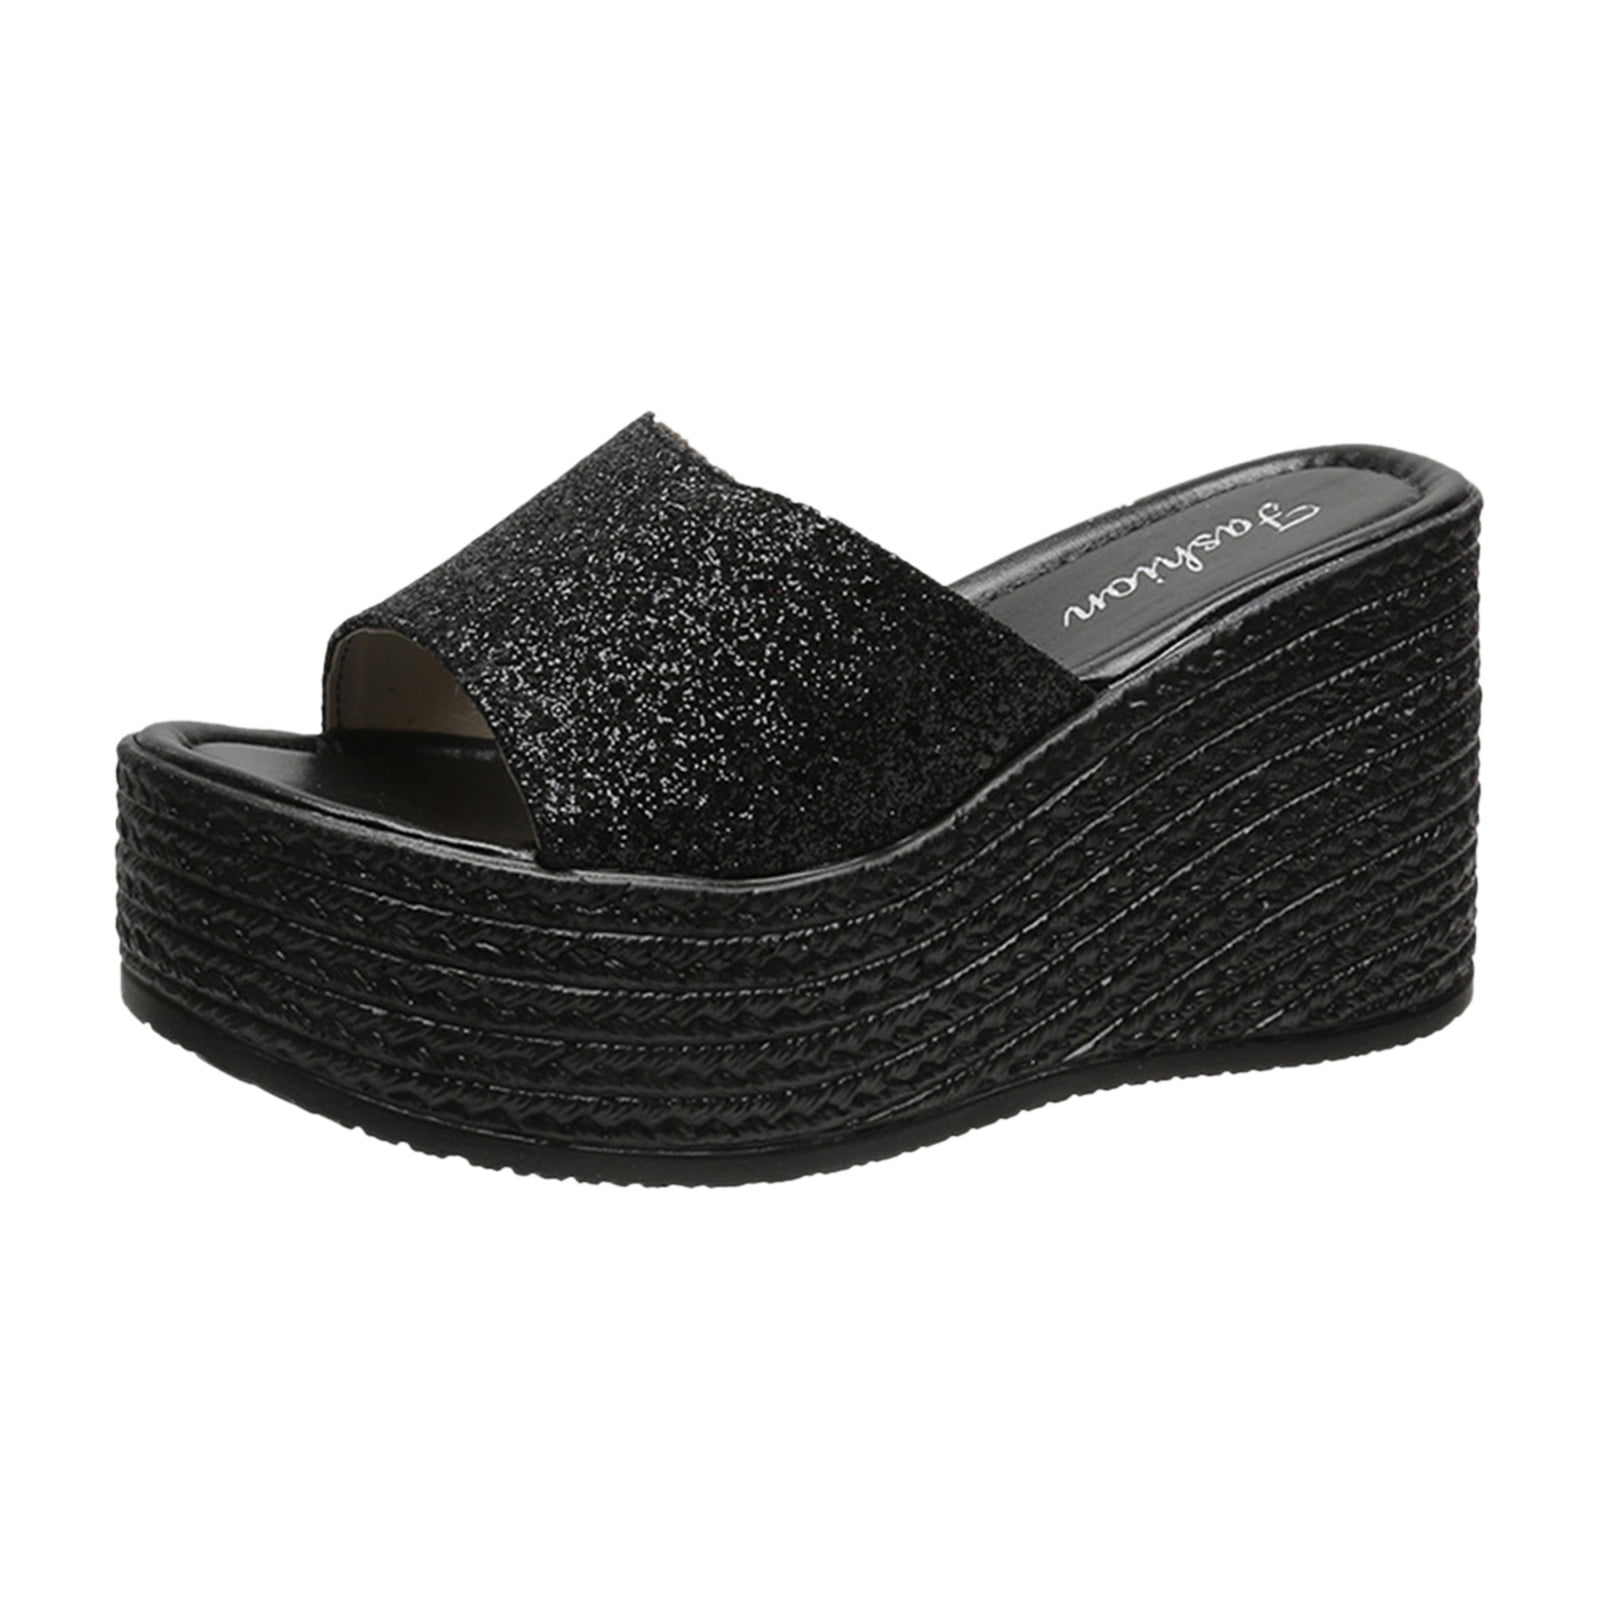 new Black Stars 5.5" Wedge High Heel 1.5" Platform Sandals Shoes Size 6.5 